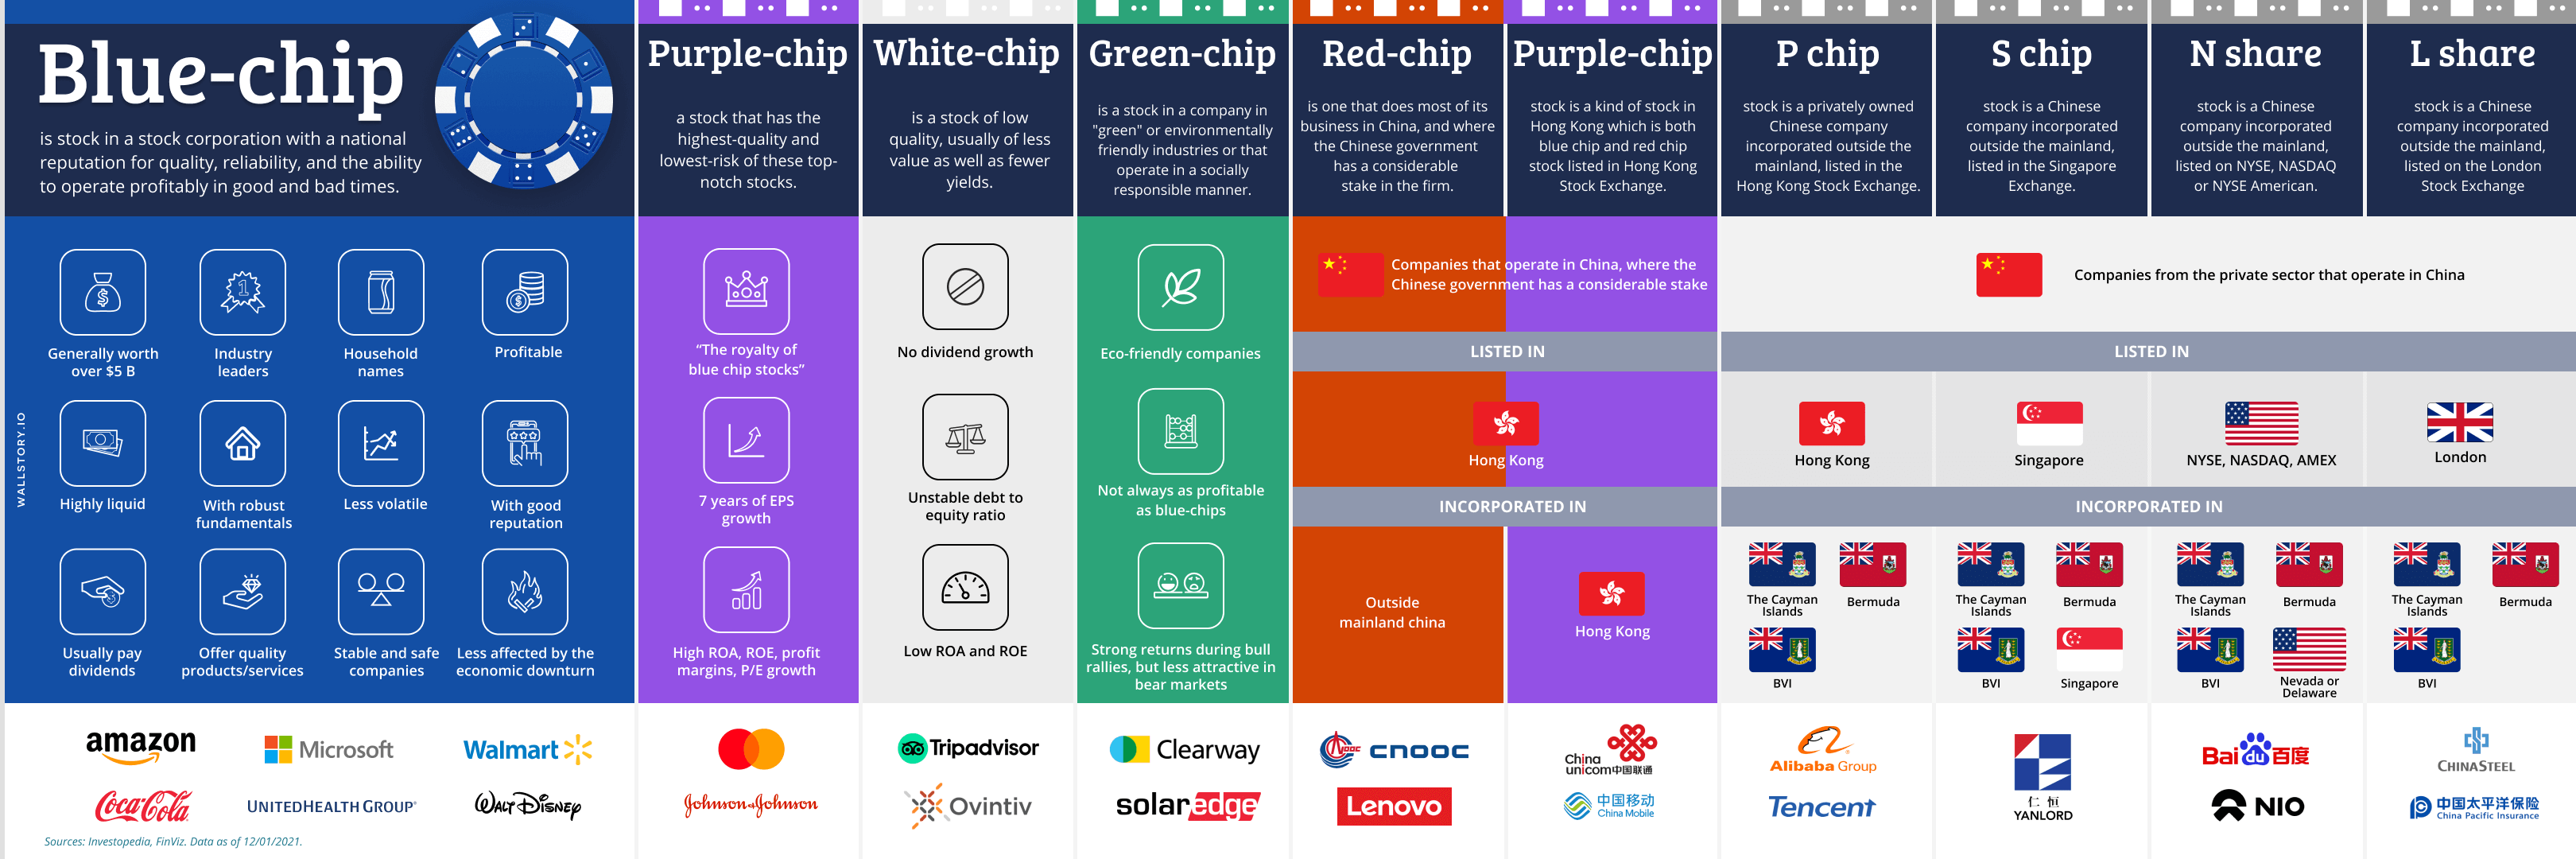 Purple-chip